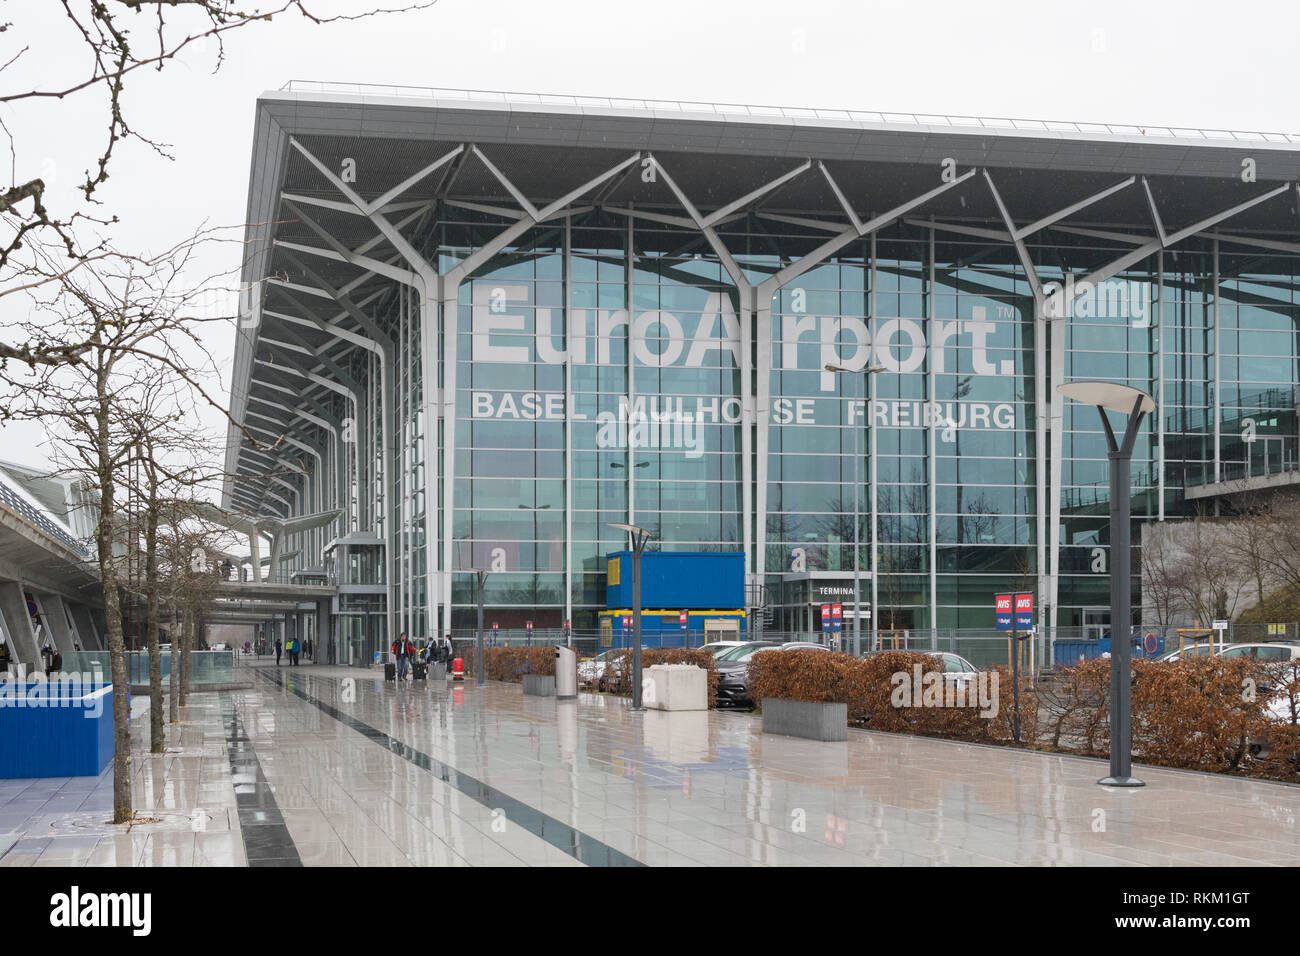 Euroairport basel mulhouse freiburg hi-res stock photography and images -  Alamy